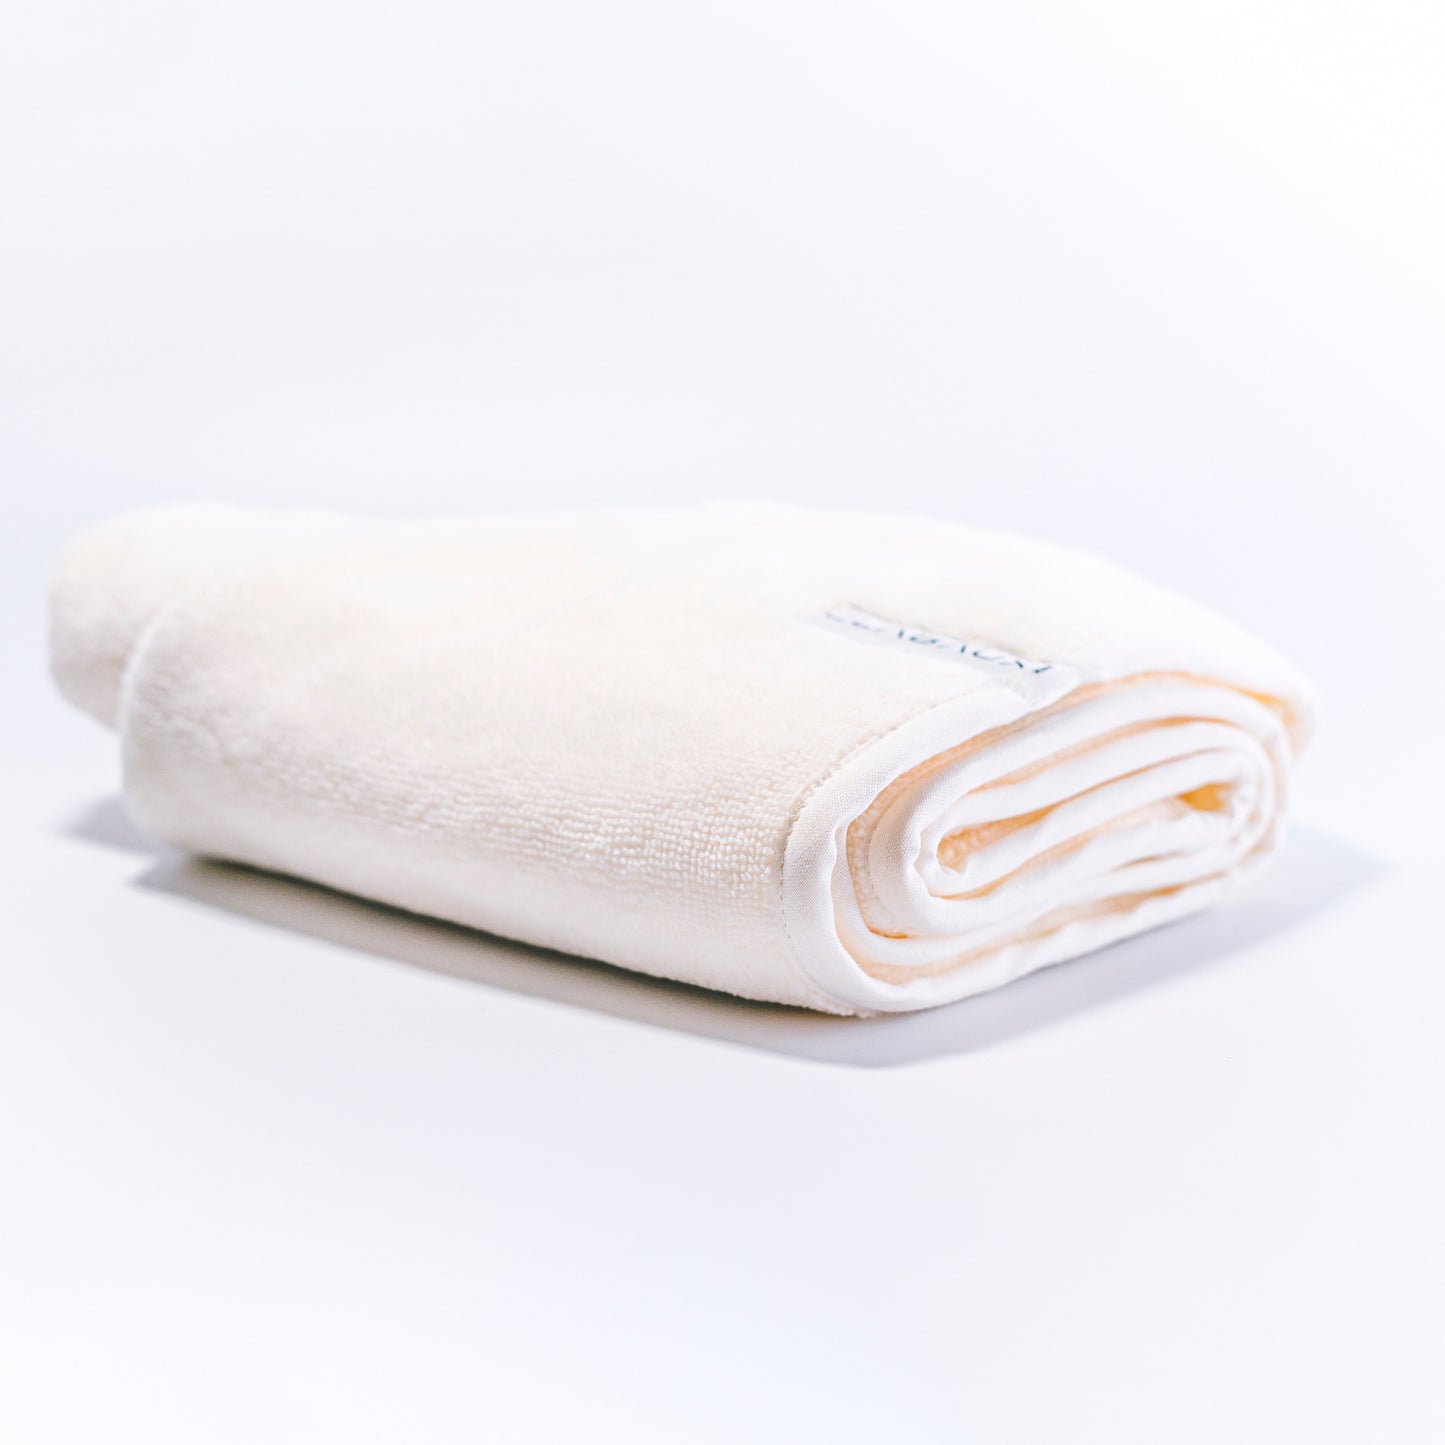 Bamboo hair towel. Hair towel wrap.